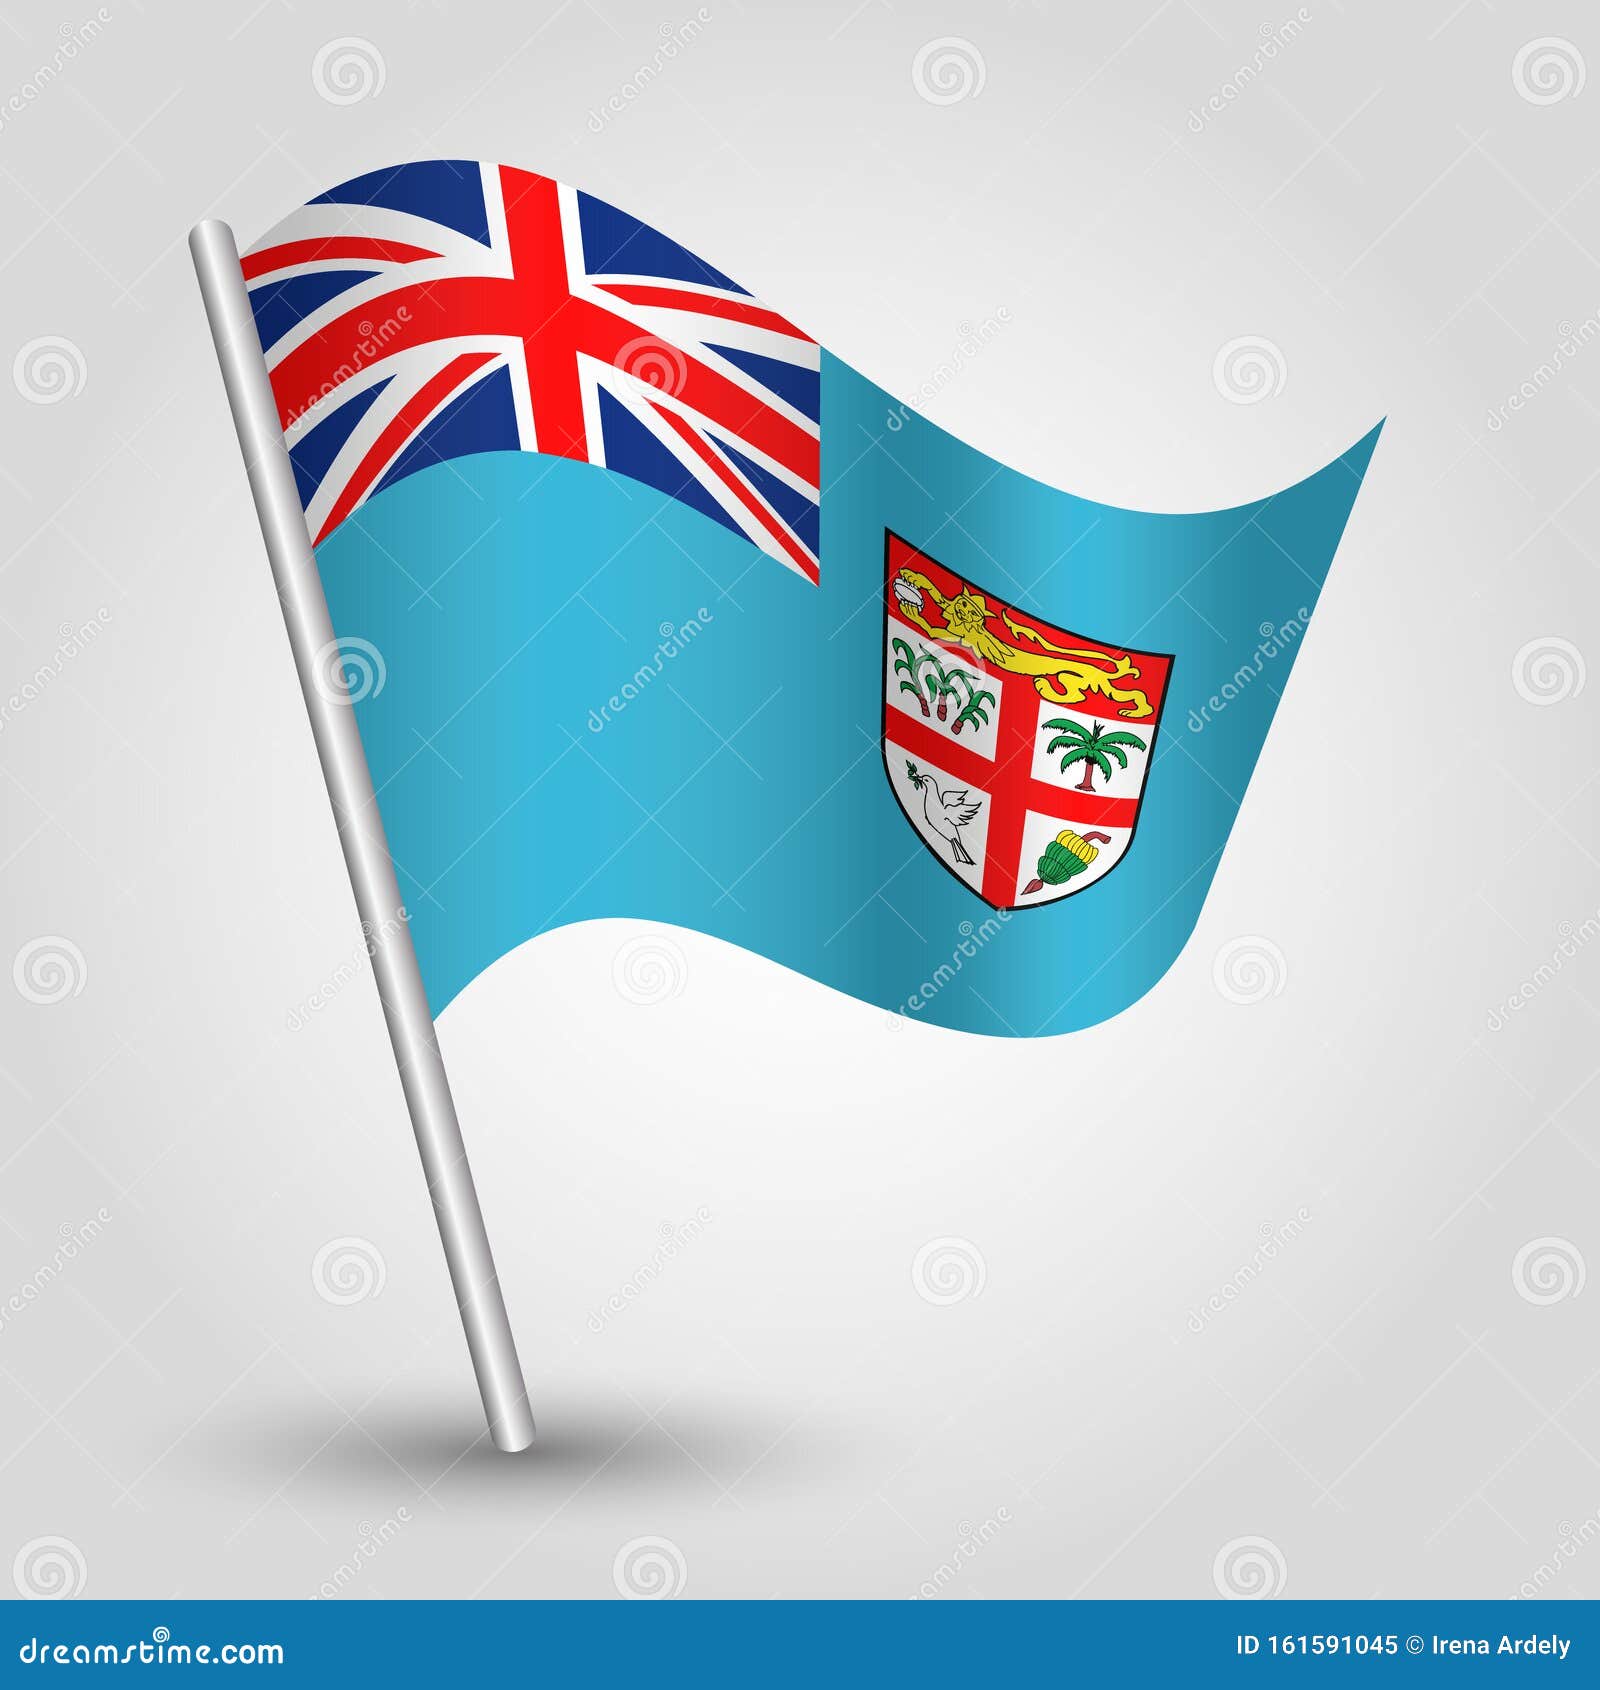 Fijian Flag Waving In The Wind Shows Fiji Symbol Of Patriotism. Motion ...